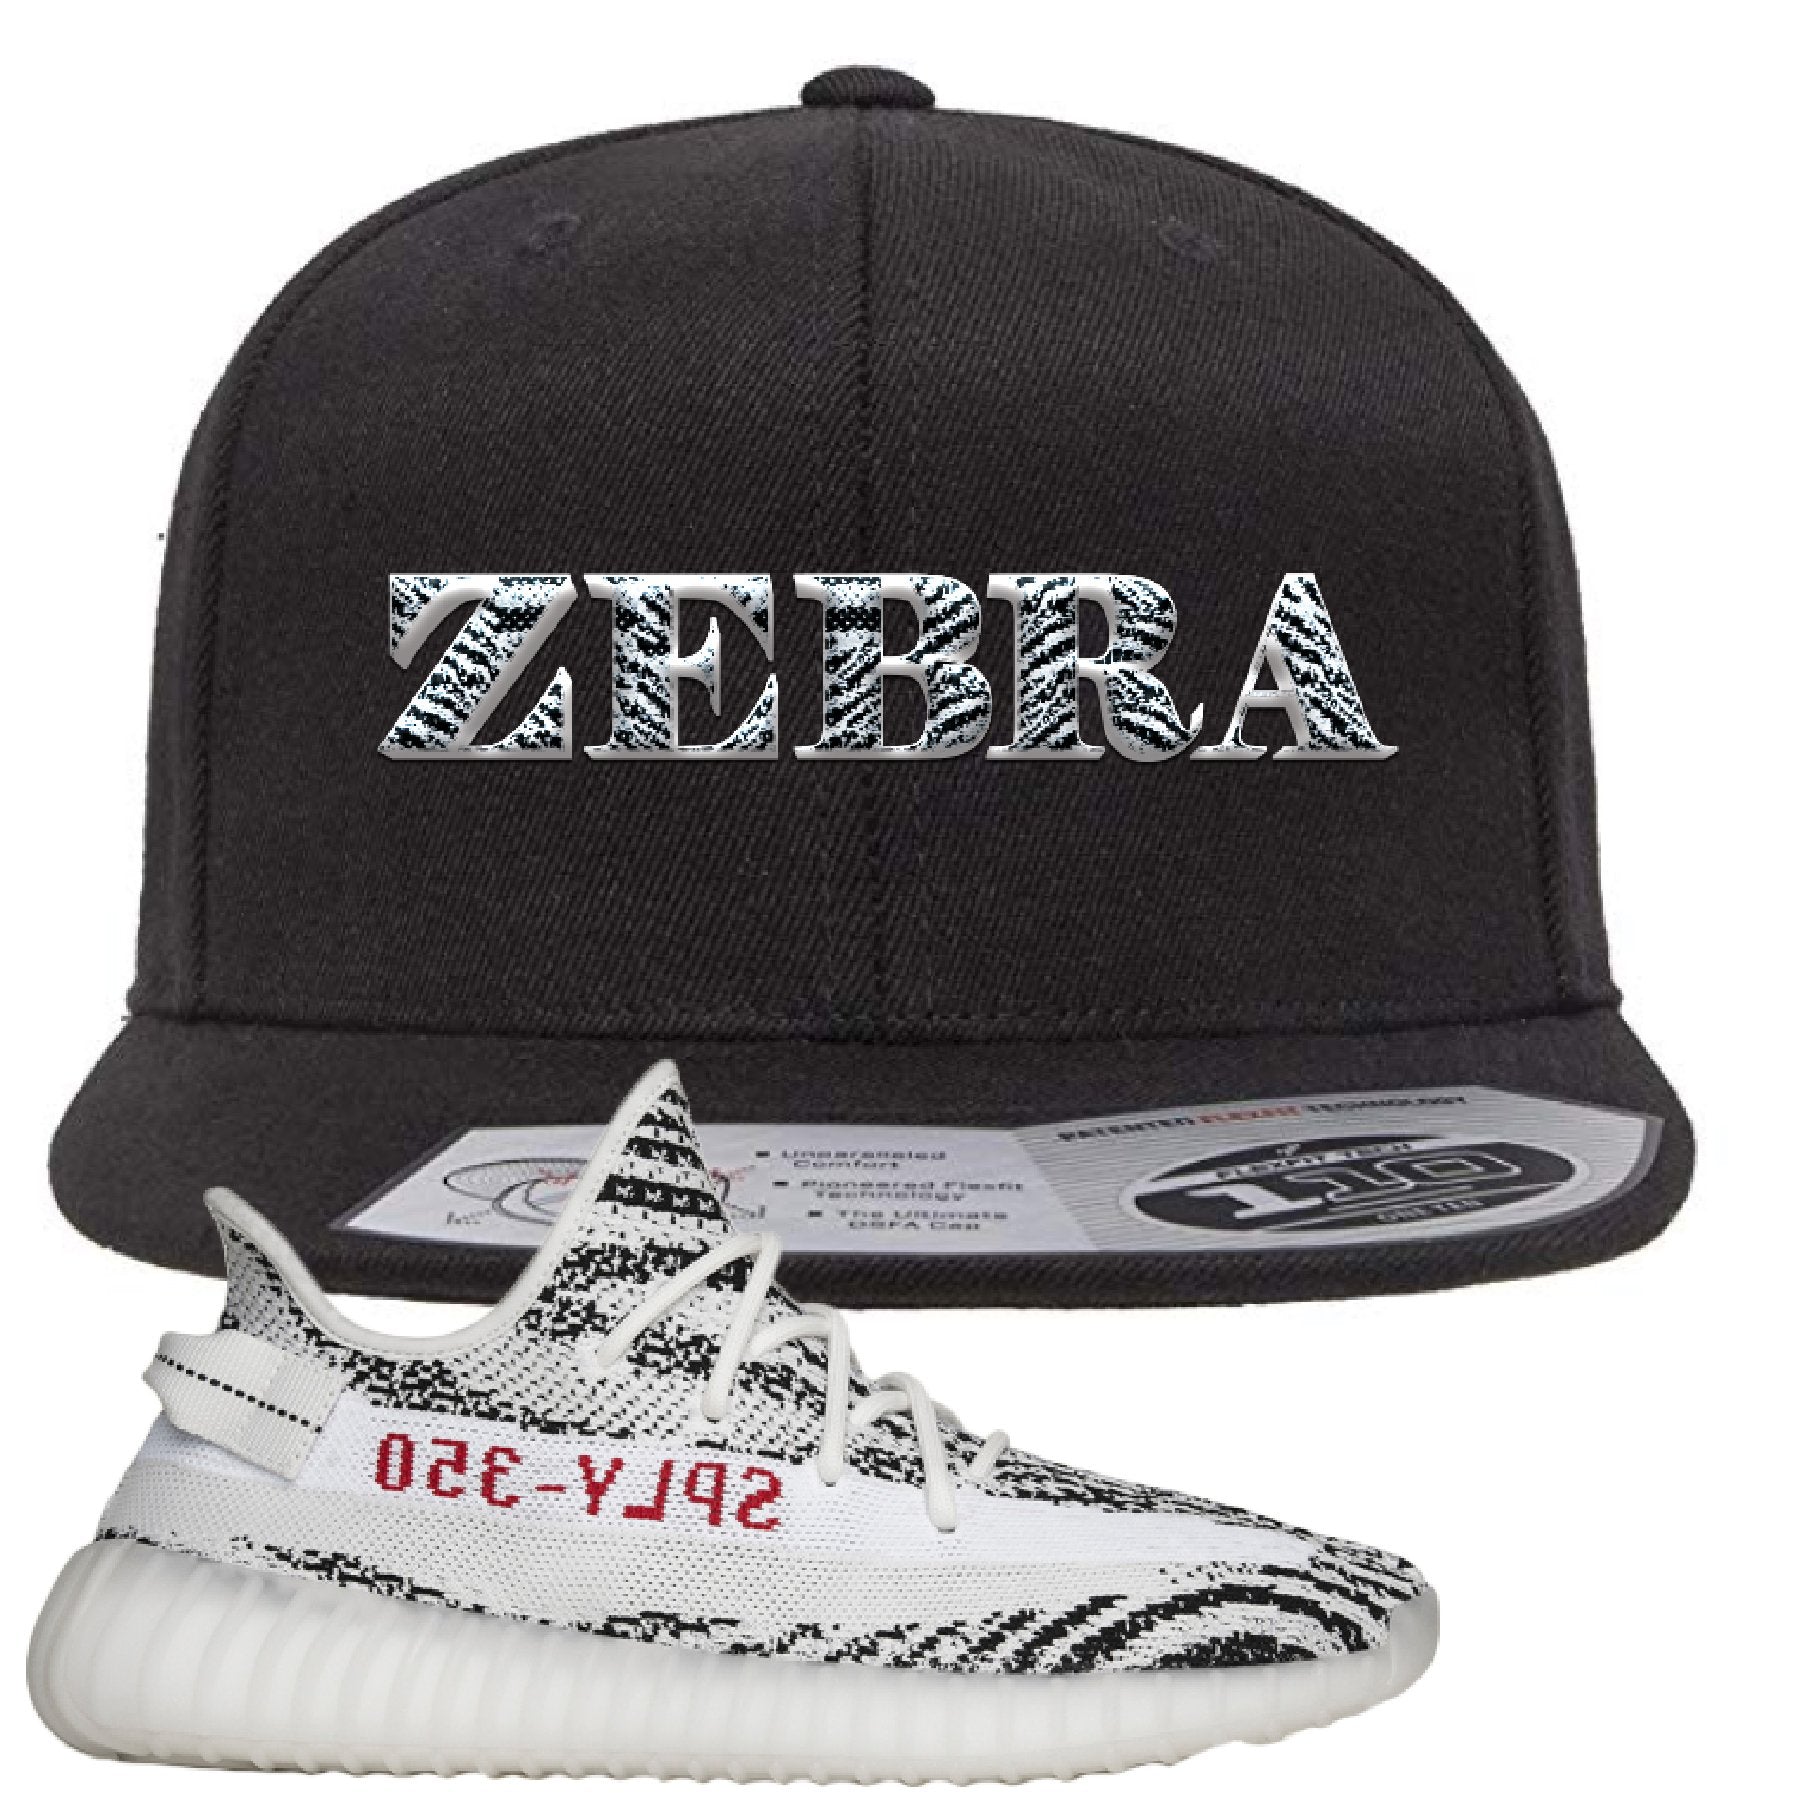 Yeezy Boost 350 V2 Zebra Zebra Black Sneaker Hook Up Snapback Hat